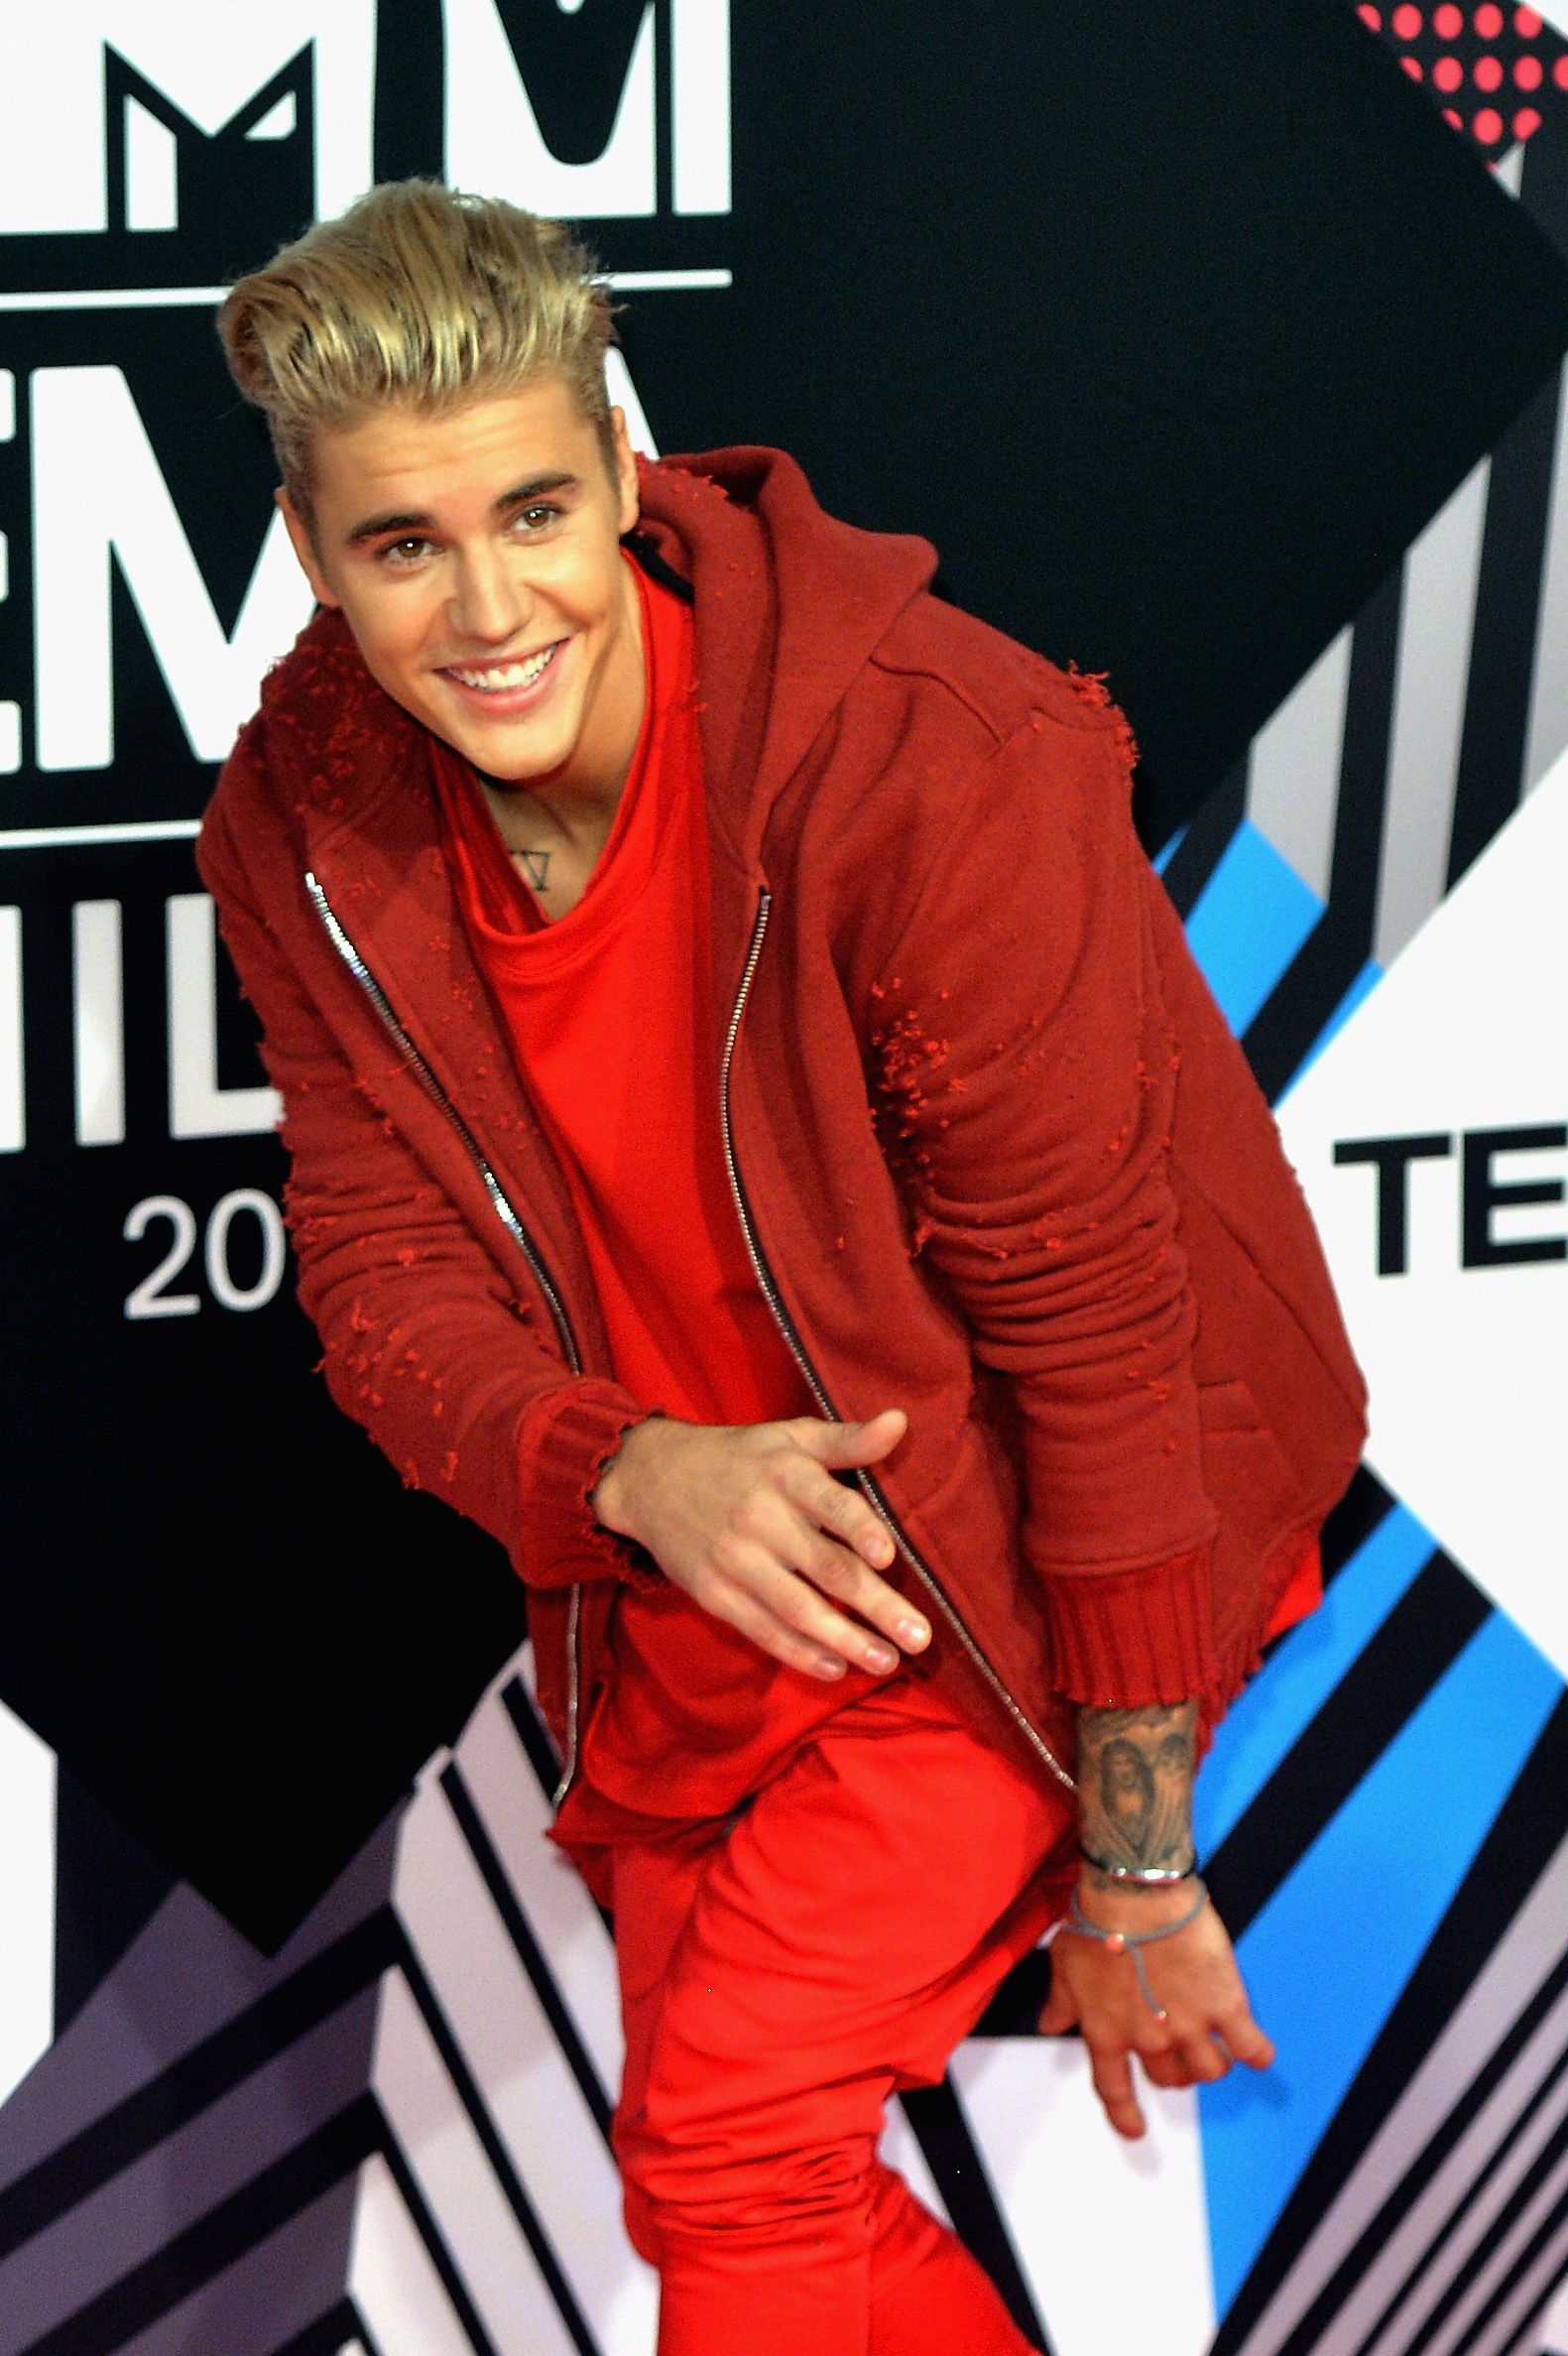 Justin Bieber attends the MTV EMAs 2015 15